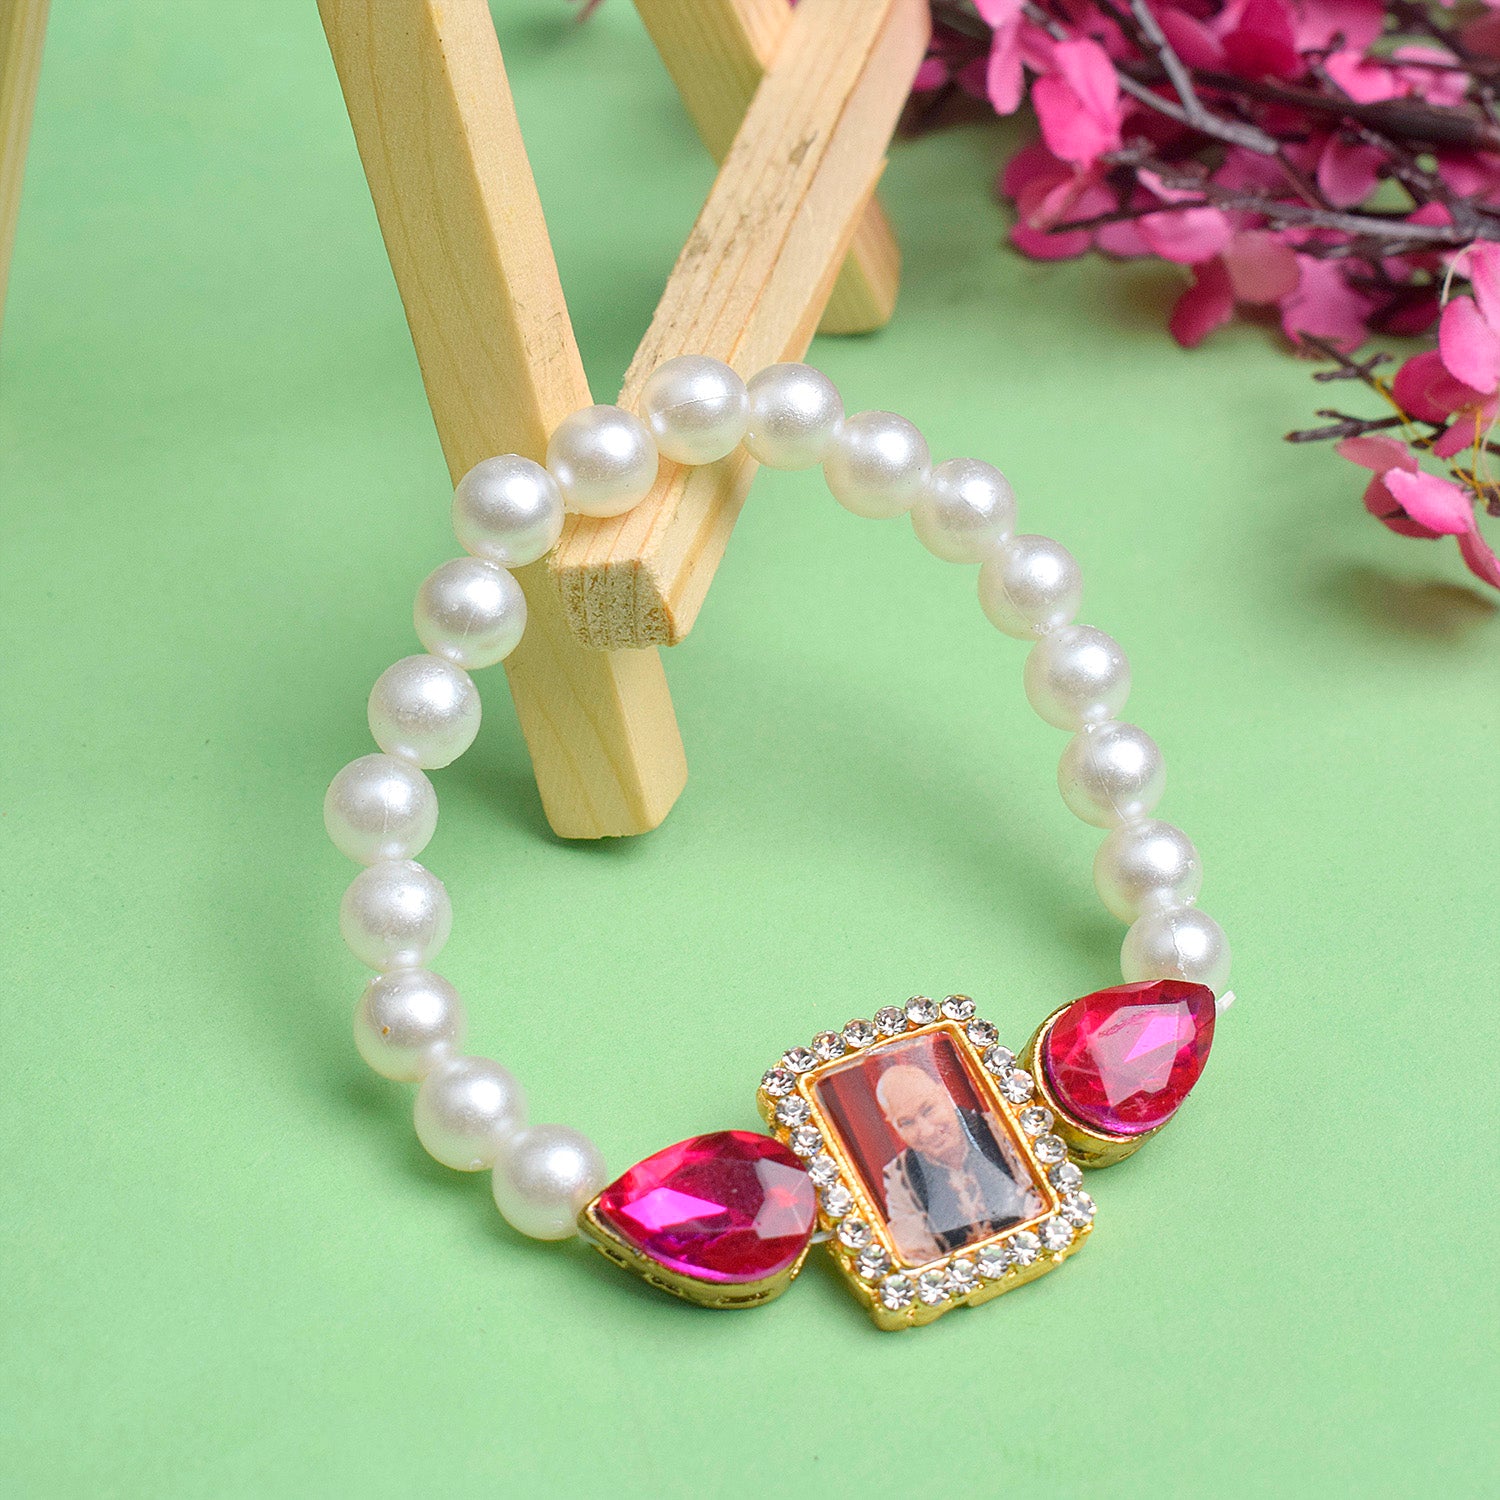 Buy ZAVERI PEARLS Pink & Mint Green Rose Gold Dazzling Austrian Diamonds  Bracelet For Women-ZPFK16601 at Amazon.in